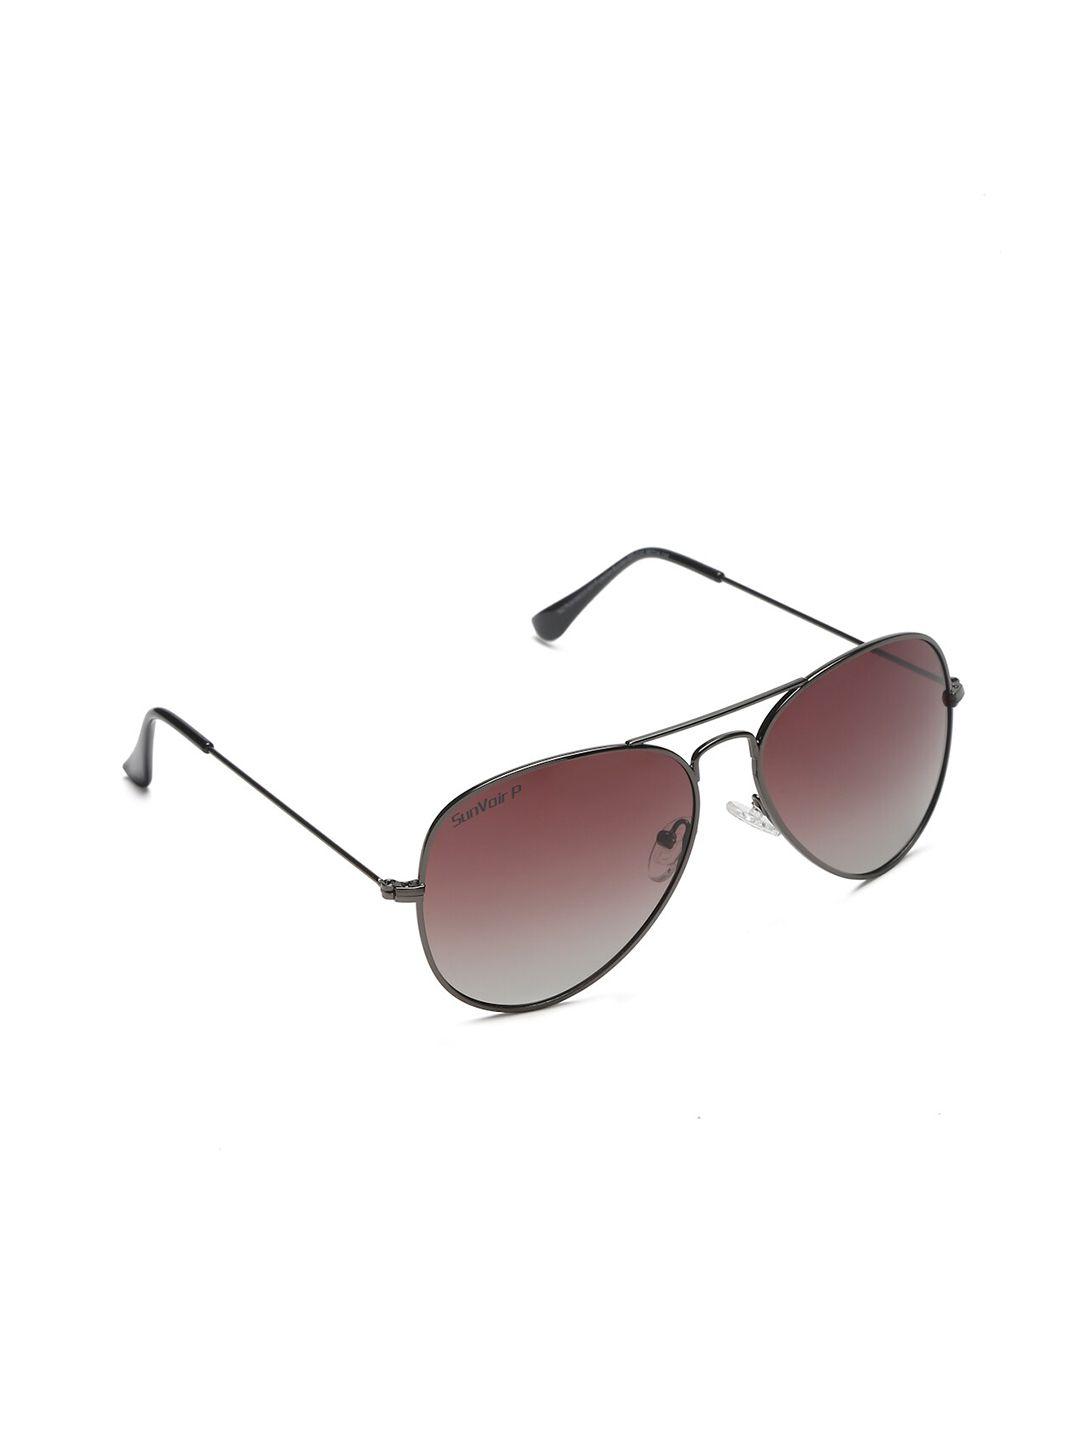 sunvoir unisex brown lens & gunmetal-toned aviator sunglasses with polarised lens